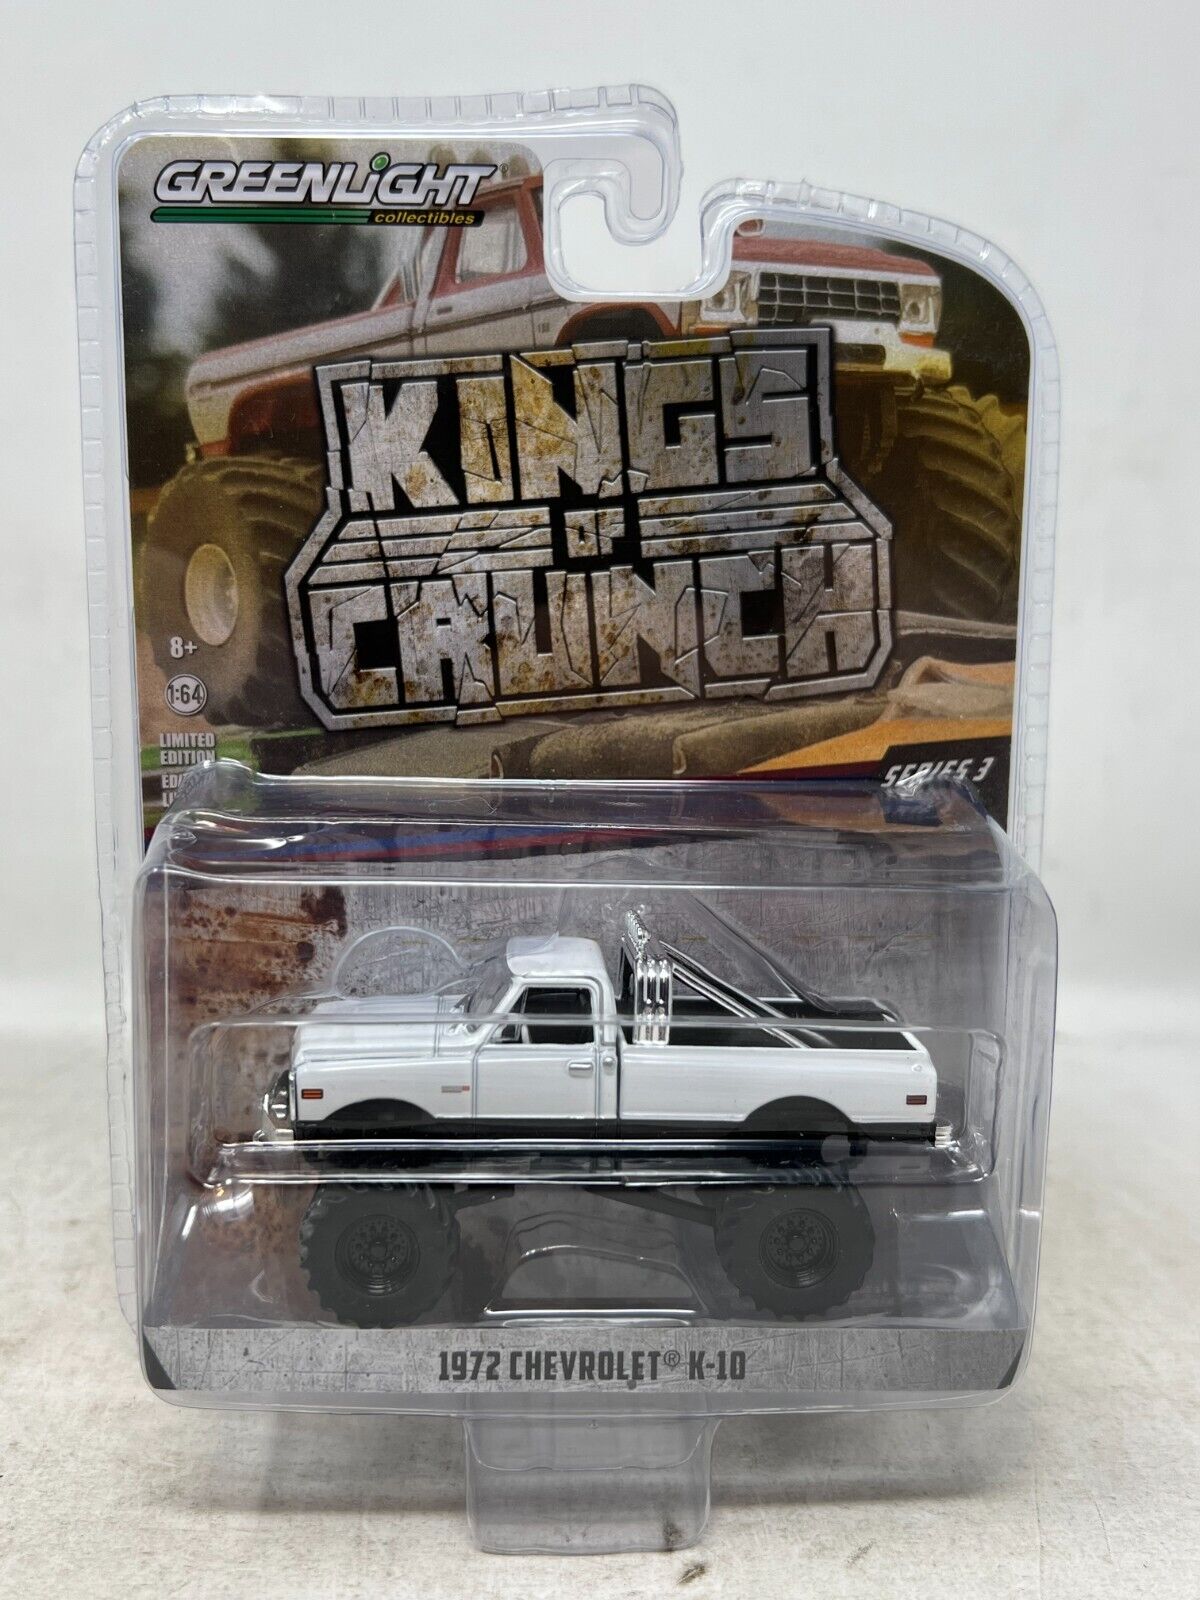 Greenlight Kings of Crunch Series 3 1972 Chevrolet K-10 1:64 Diecast